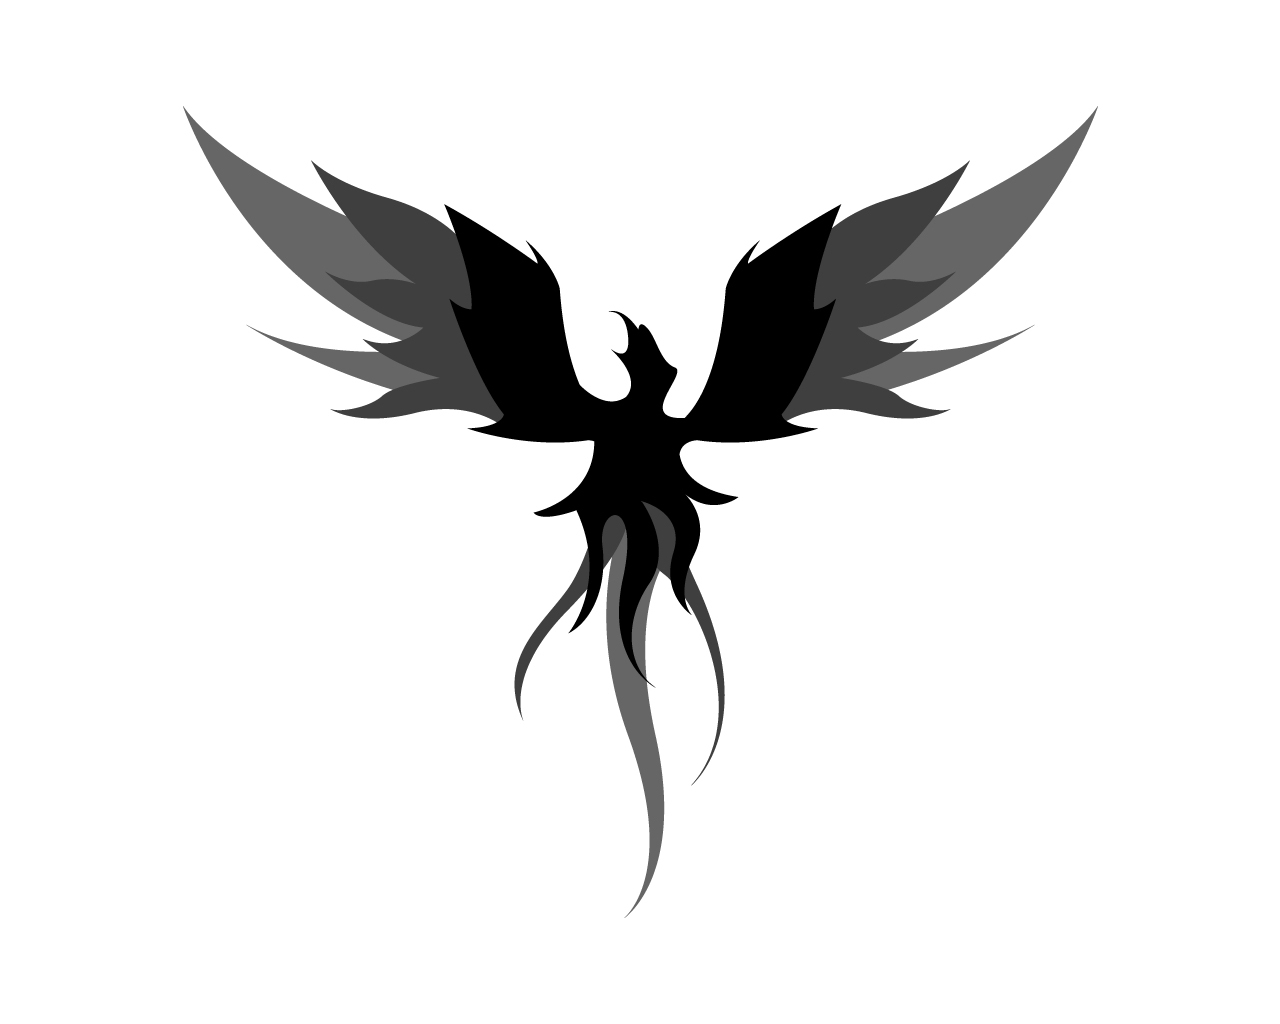 Silhouette Flying Phoenix Tattoo Design